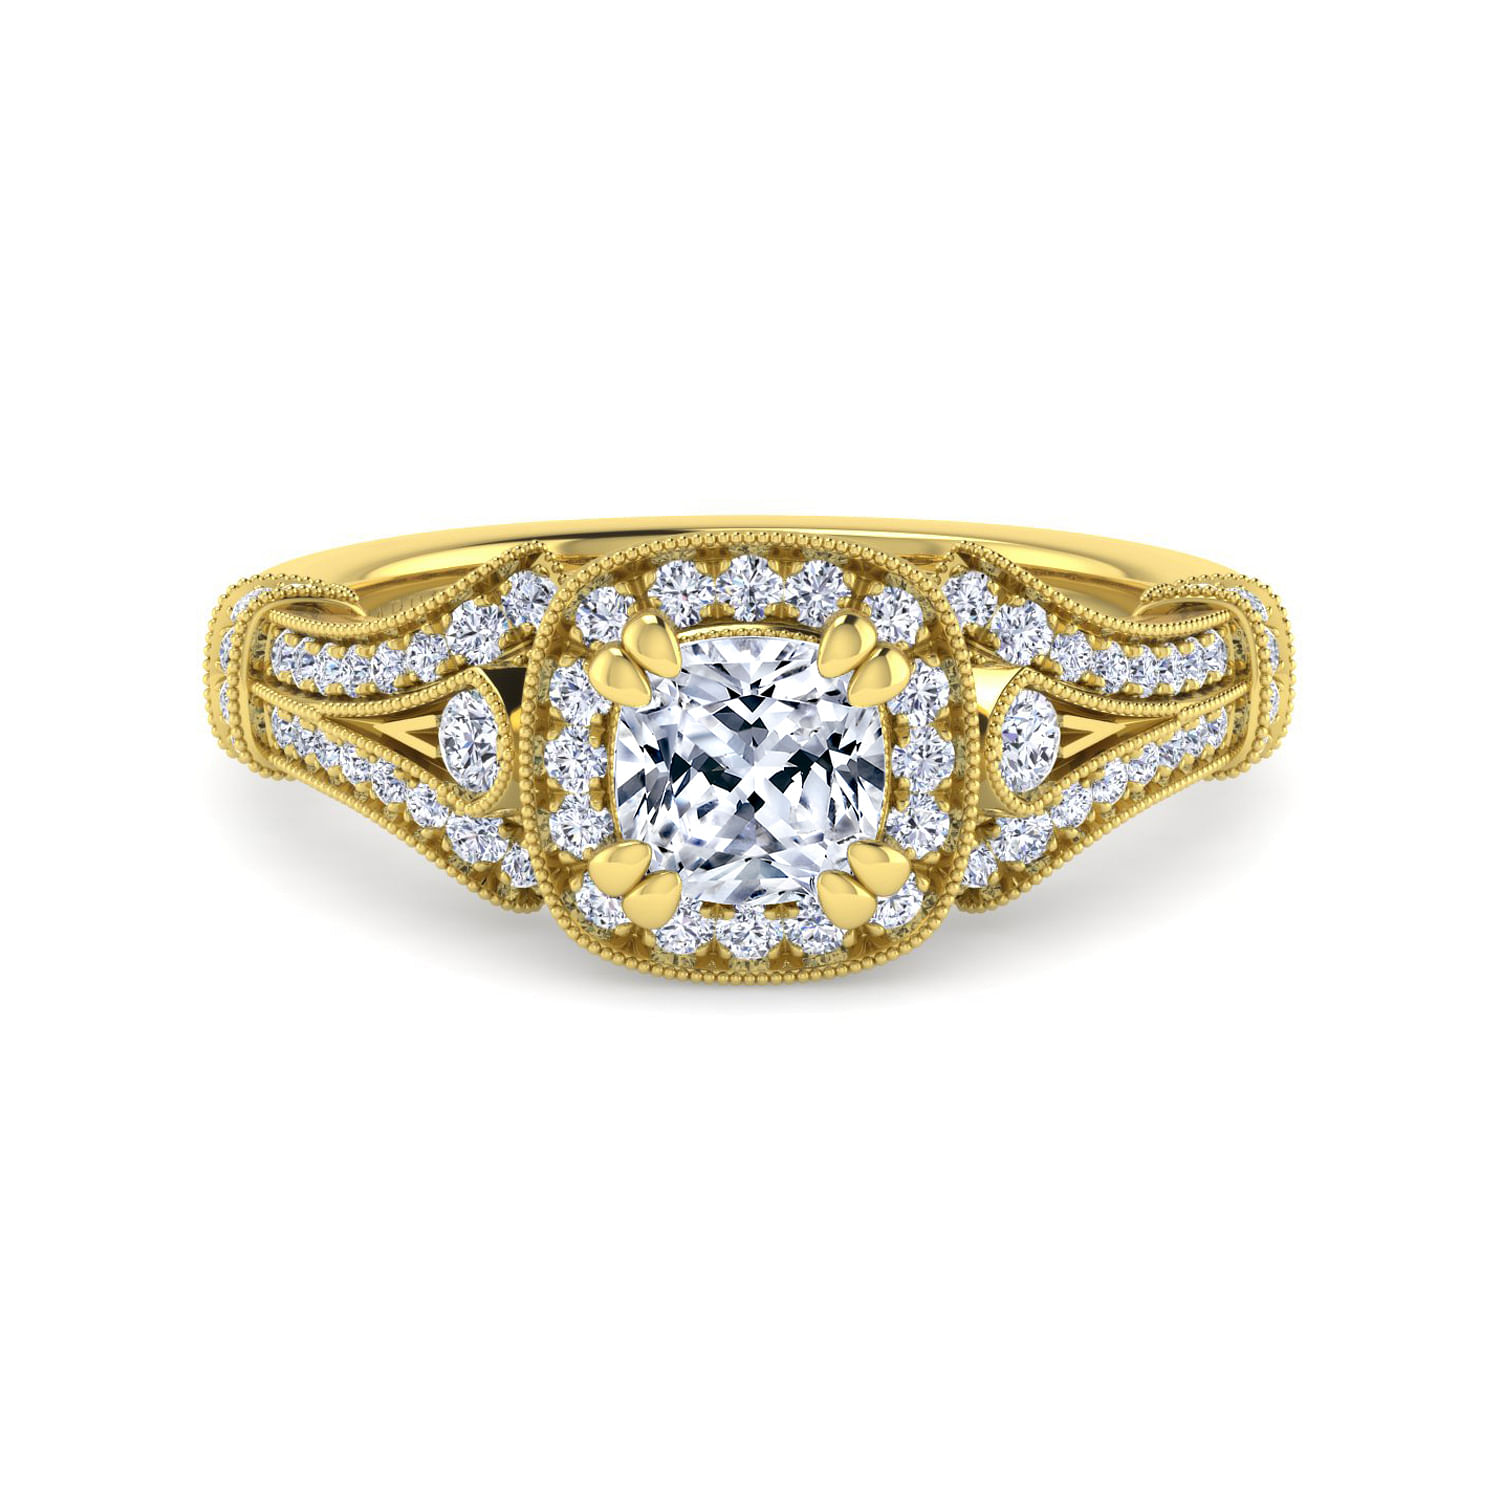 Delilah---Vintage-Inspired-14K-Yellow-Gold-Cushion-Halo-Diamond-Engagement-Ring1